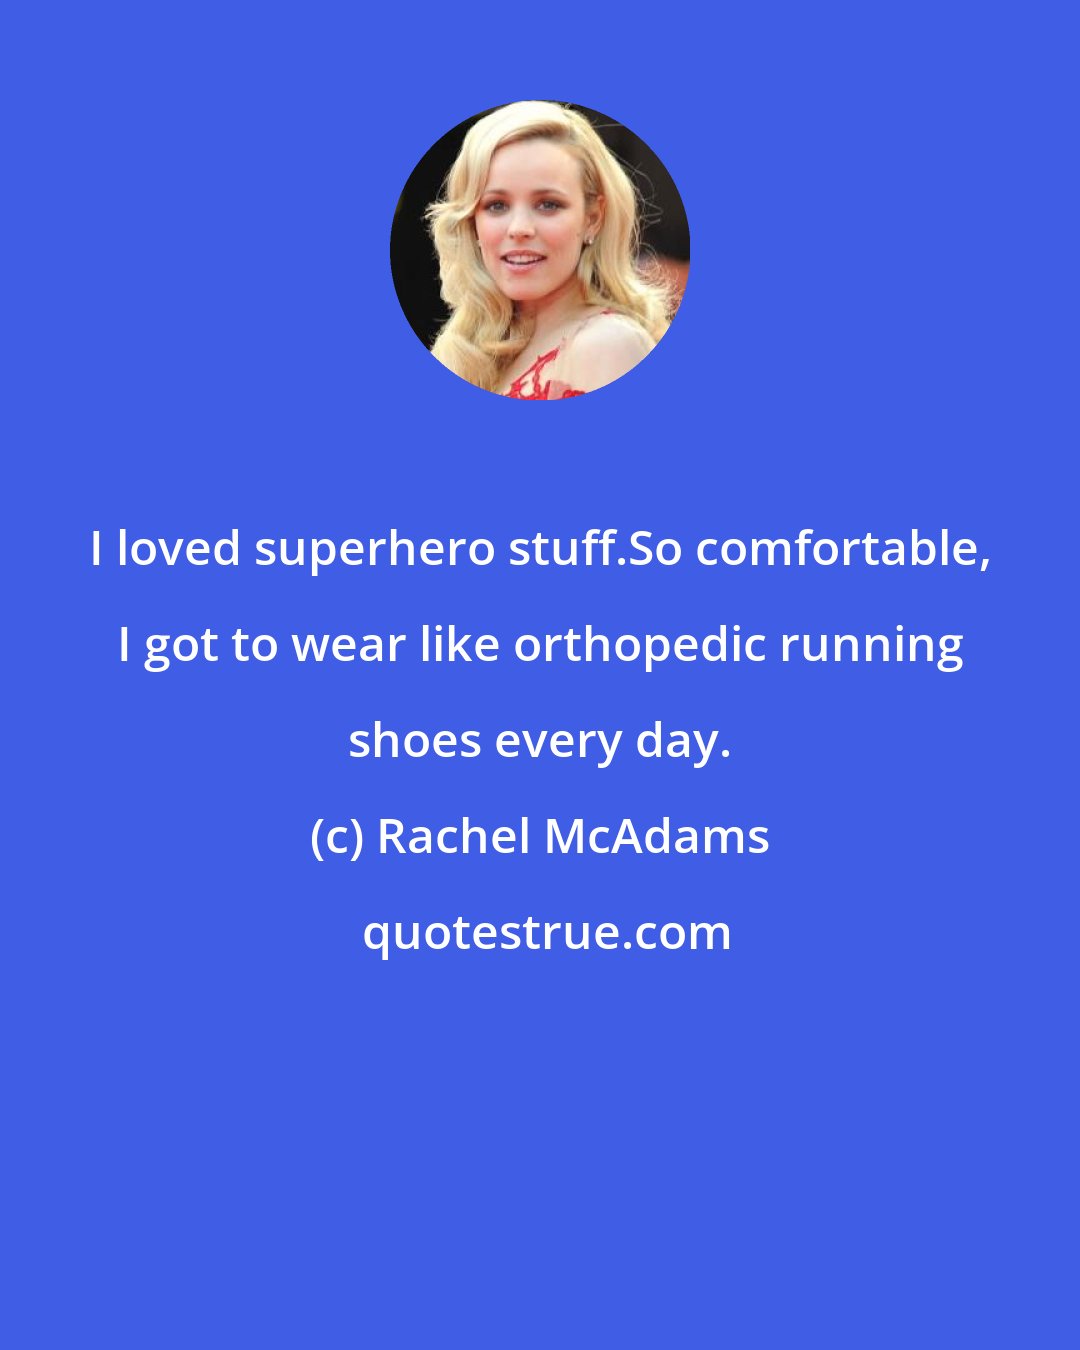 Rachel McAdams: I loved superhero stuff.So comfortable, I got to wear like orthopedic running shoes every day.